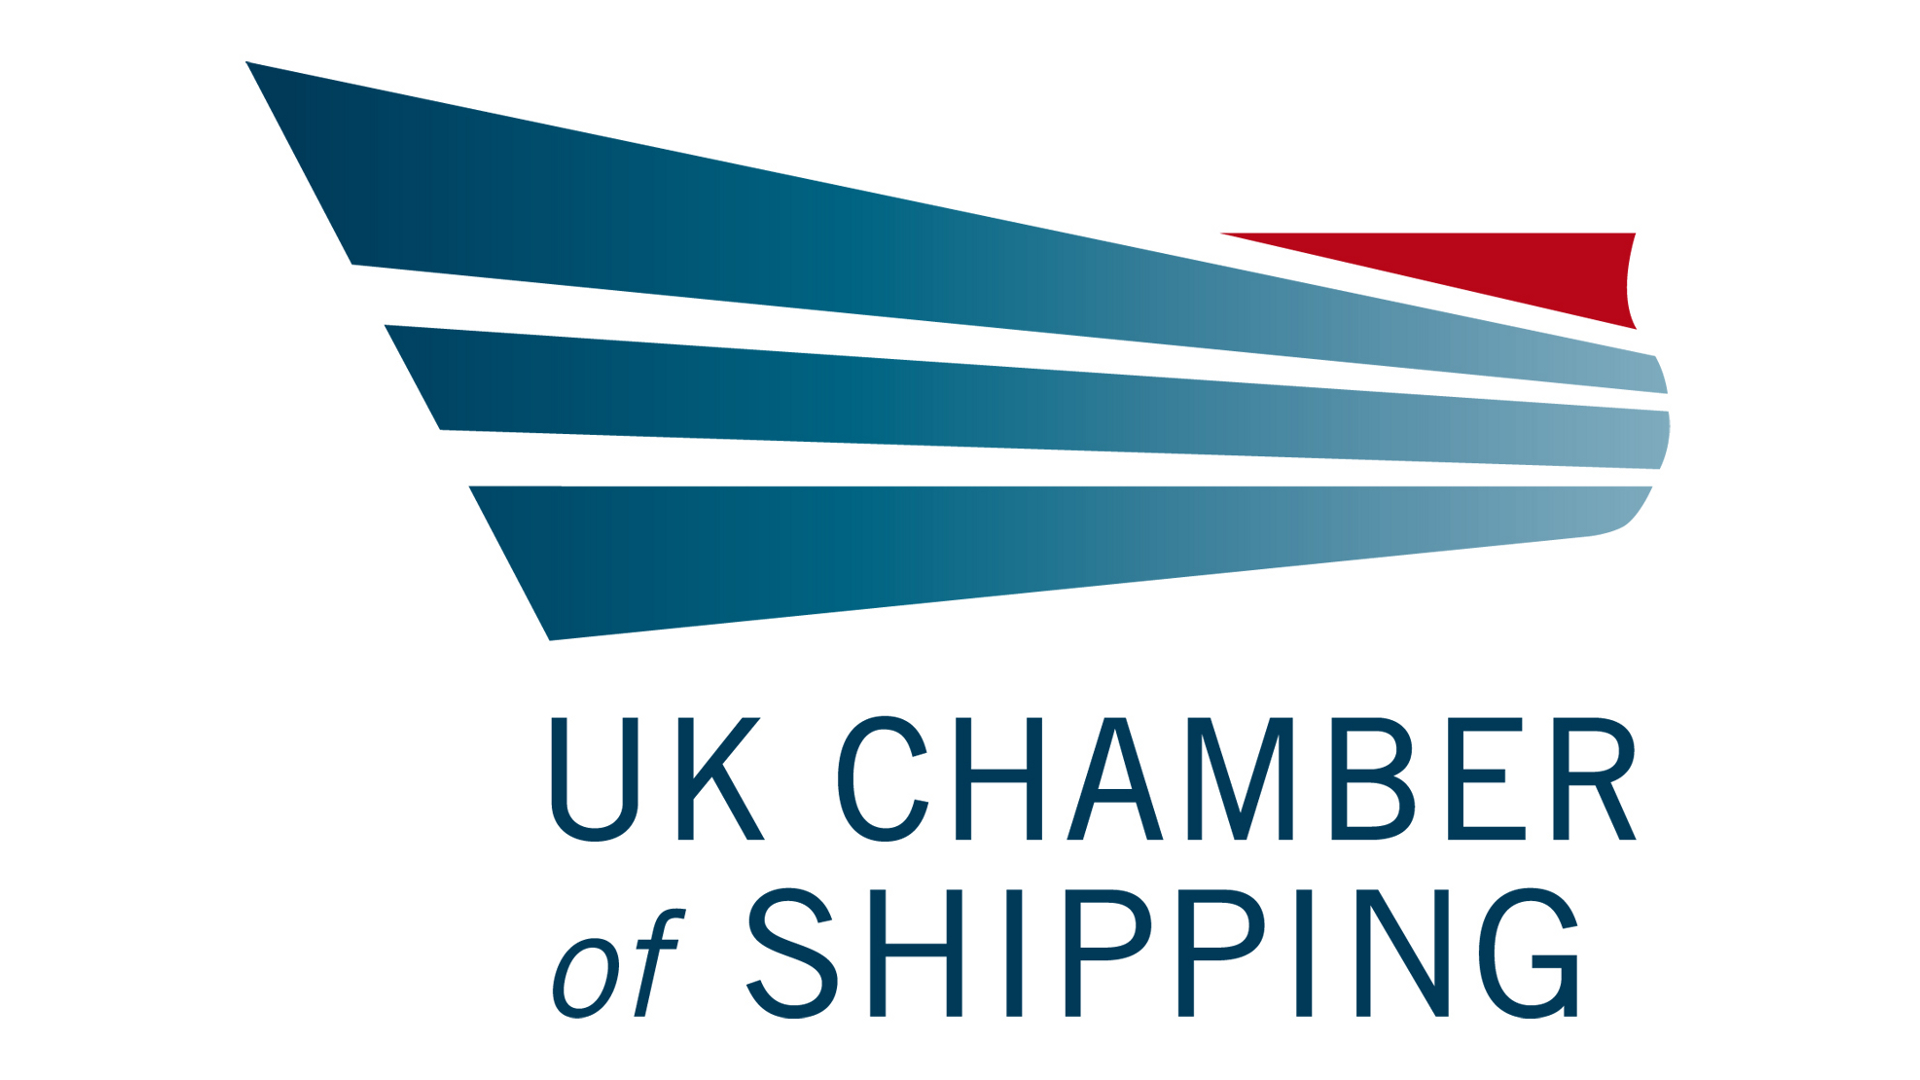 UK Chamberof Shipping logo - 1920x1080.jpg